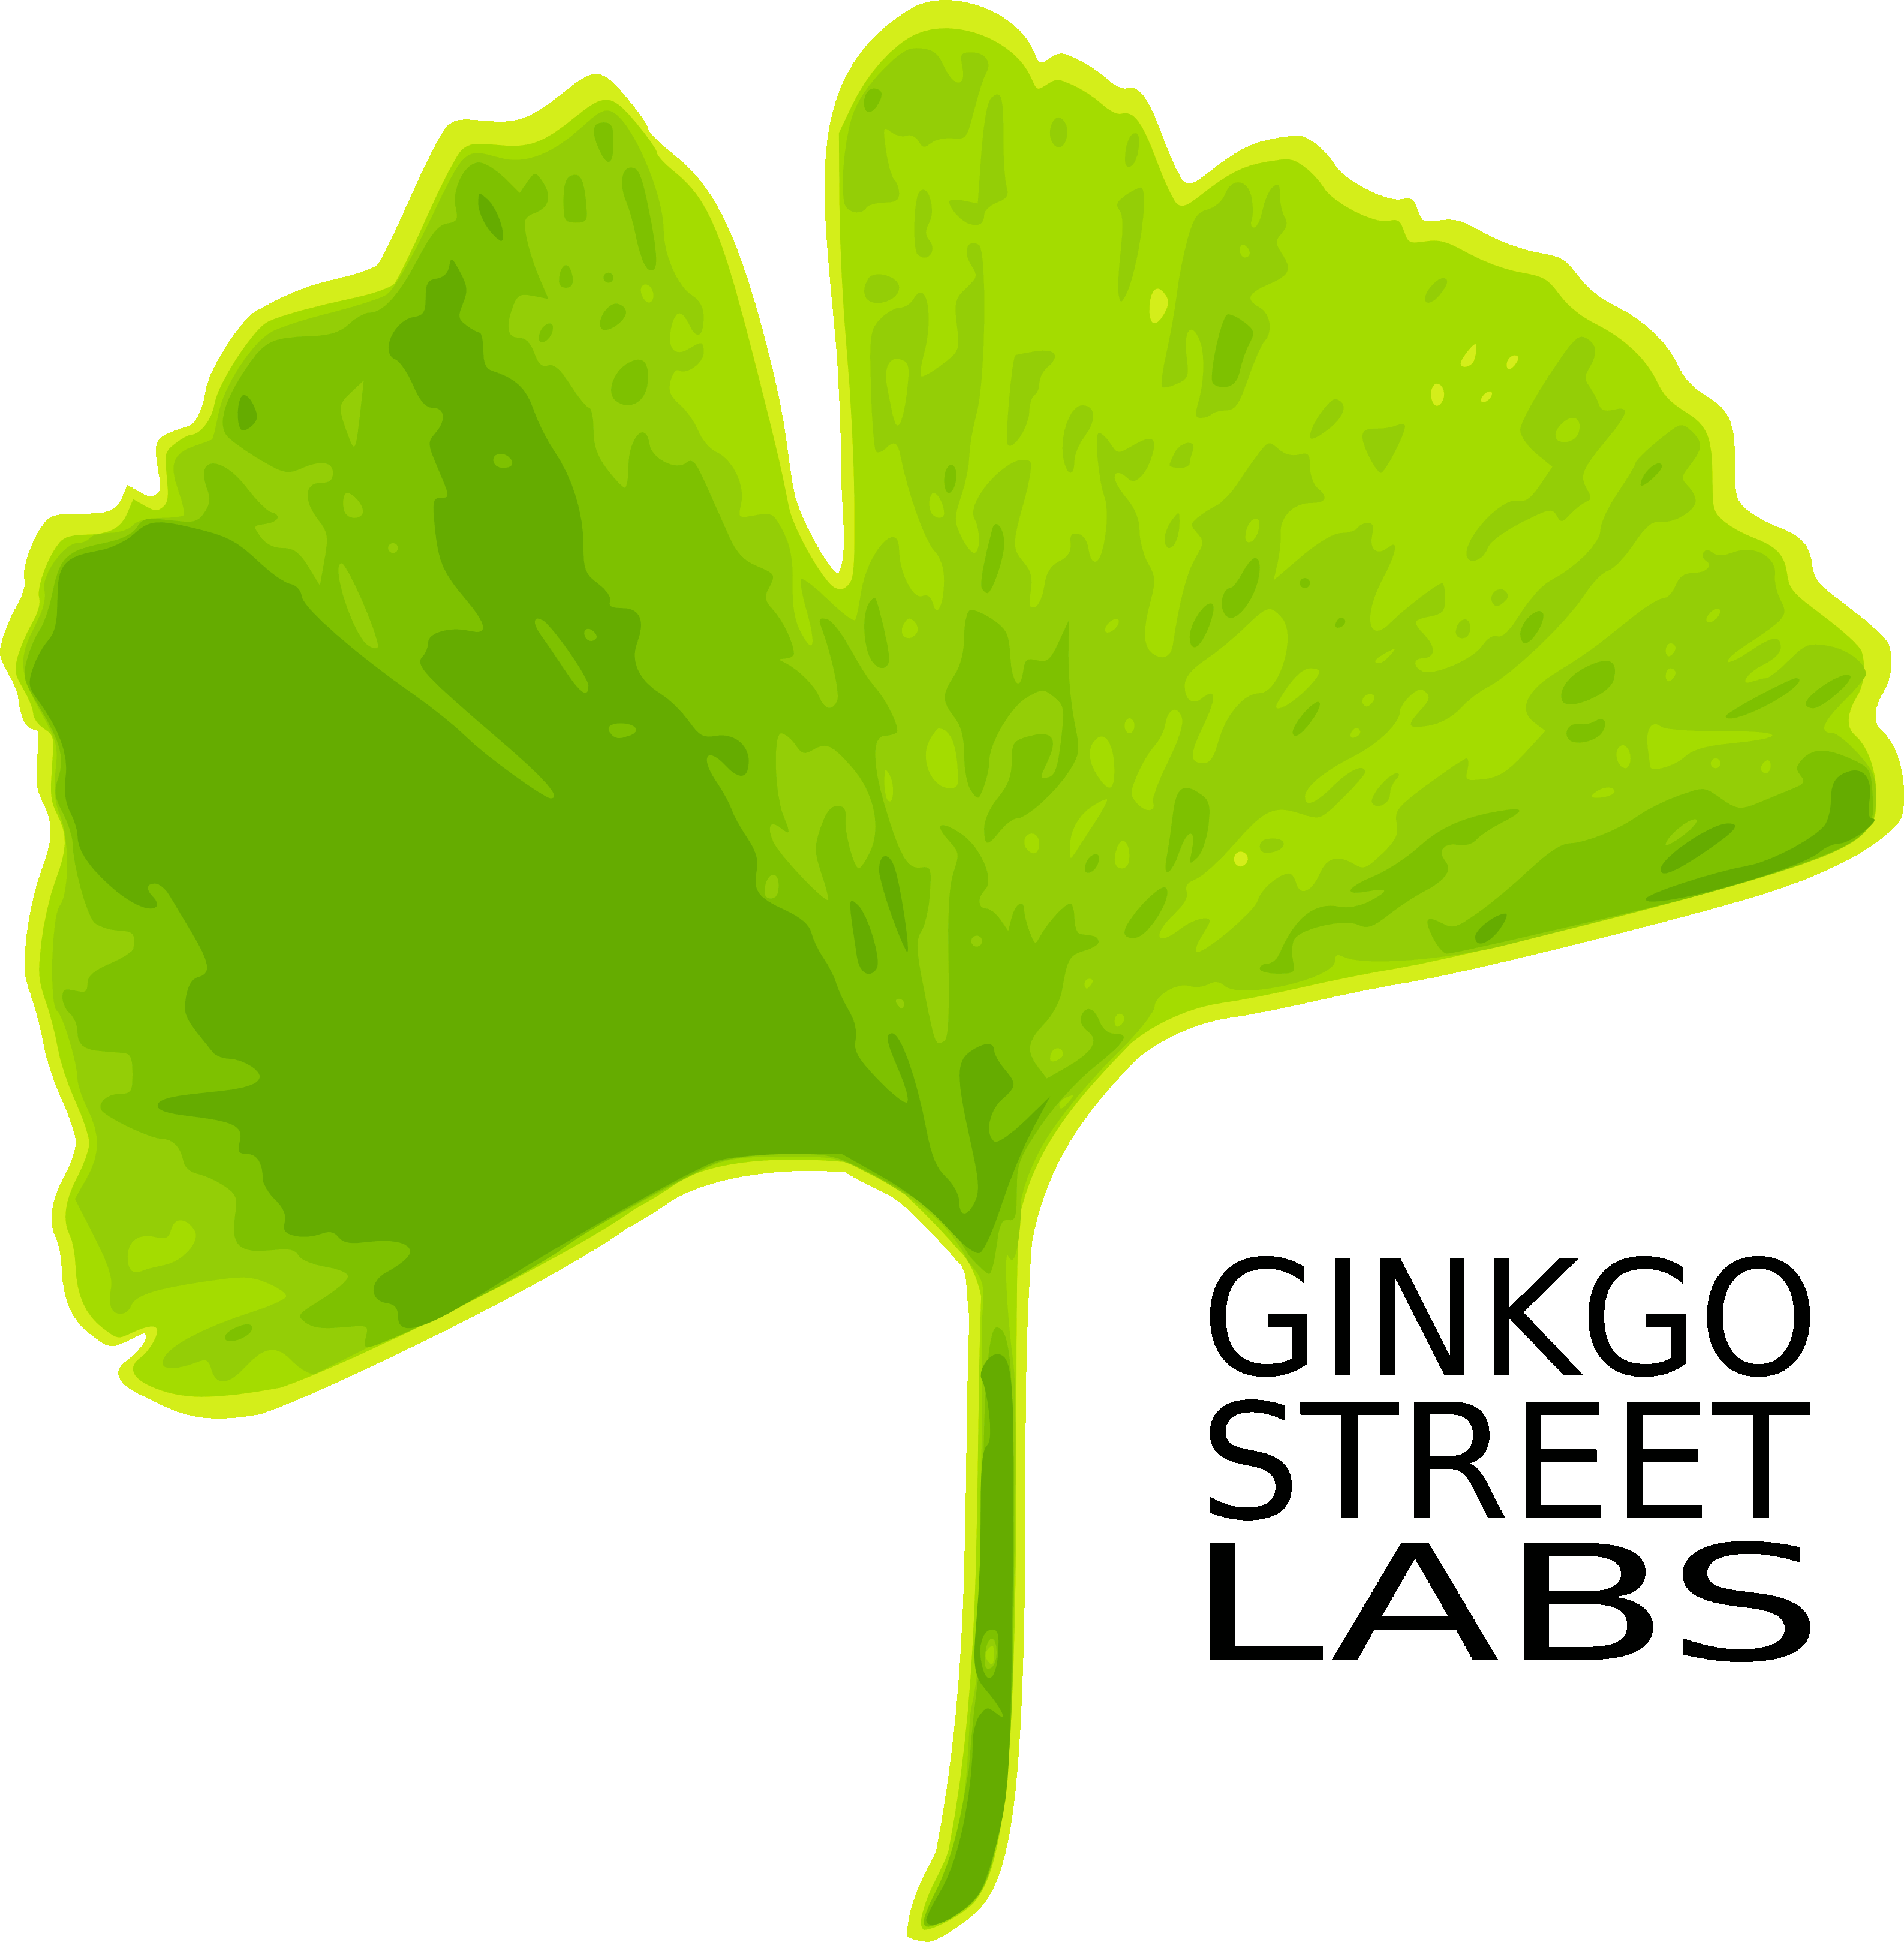 Ginkgo Street Labs